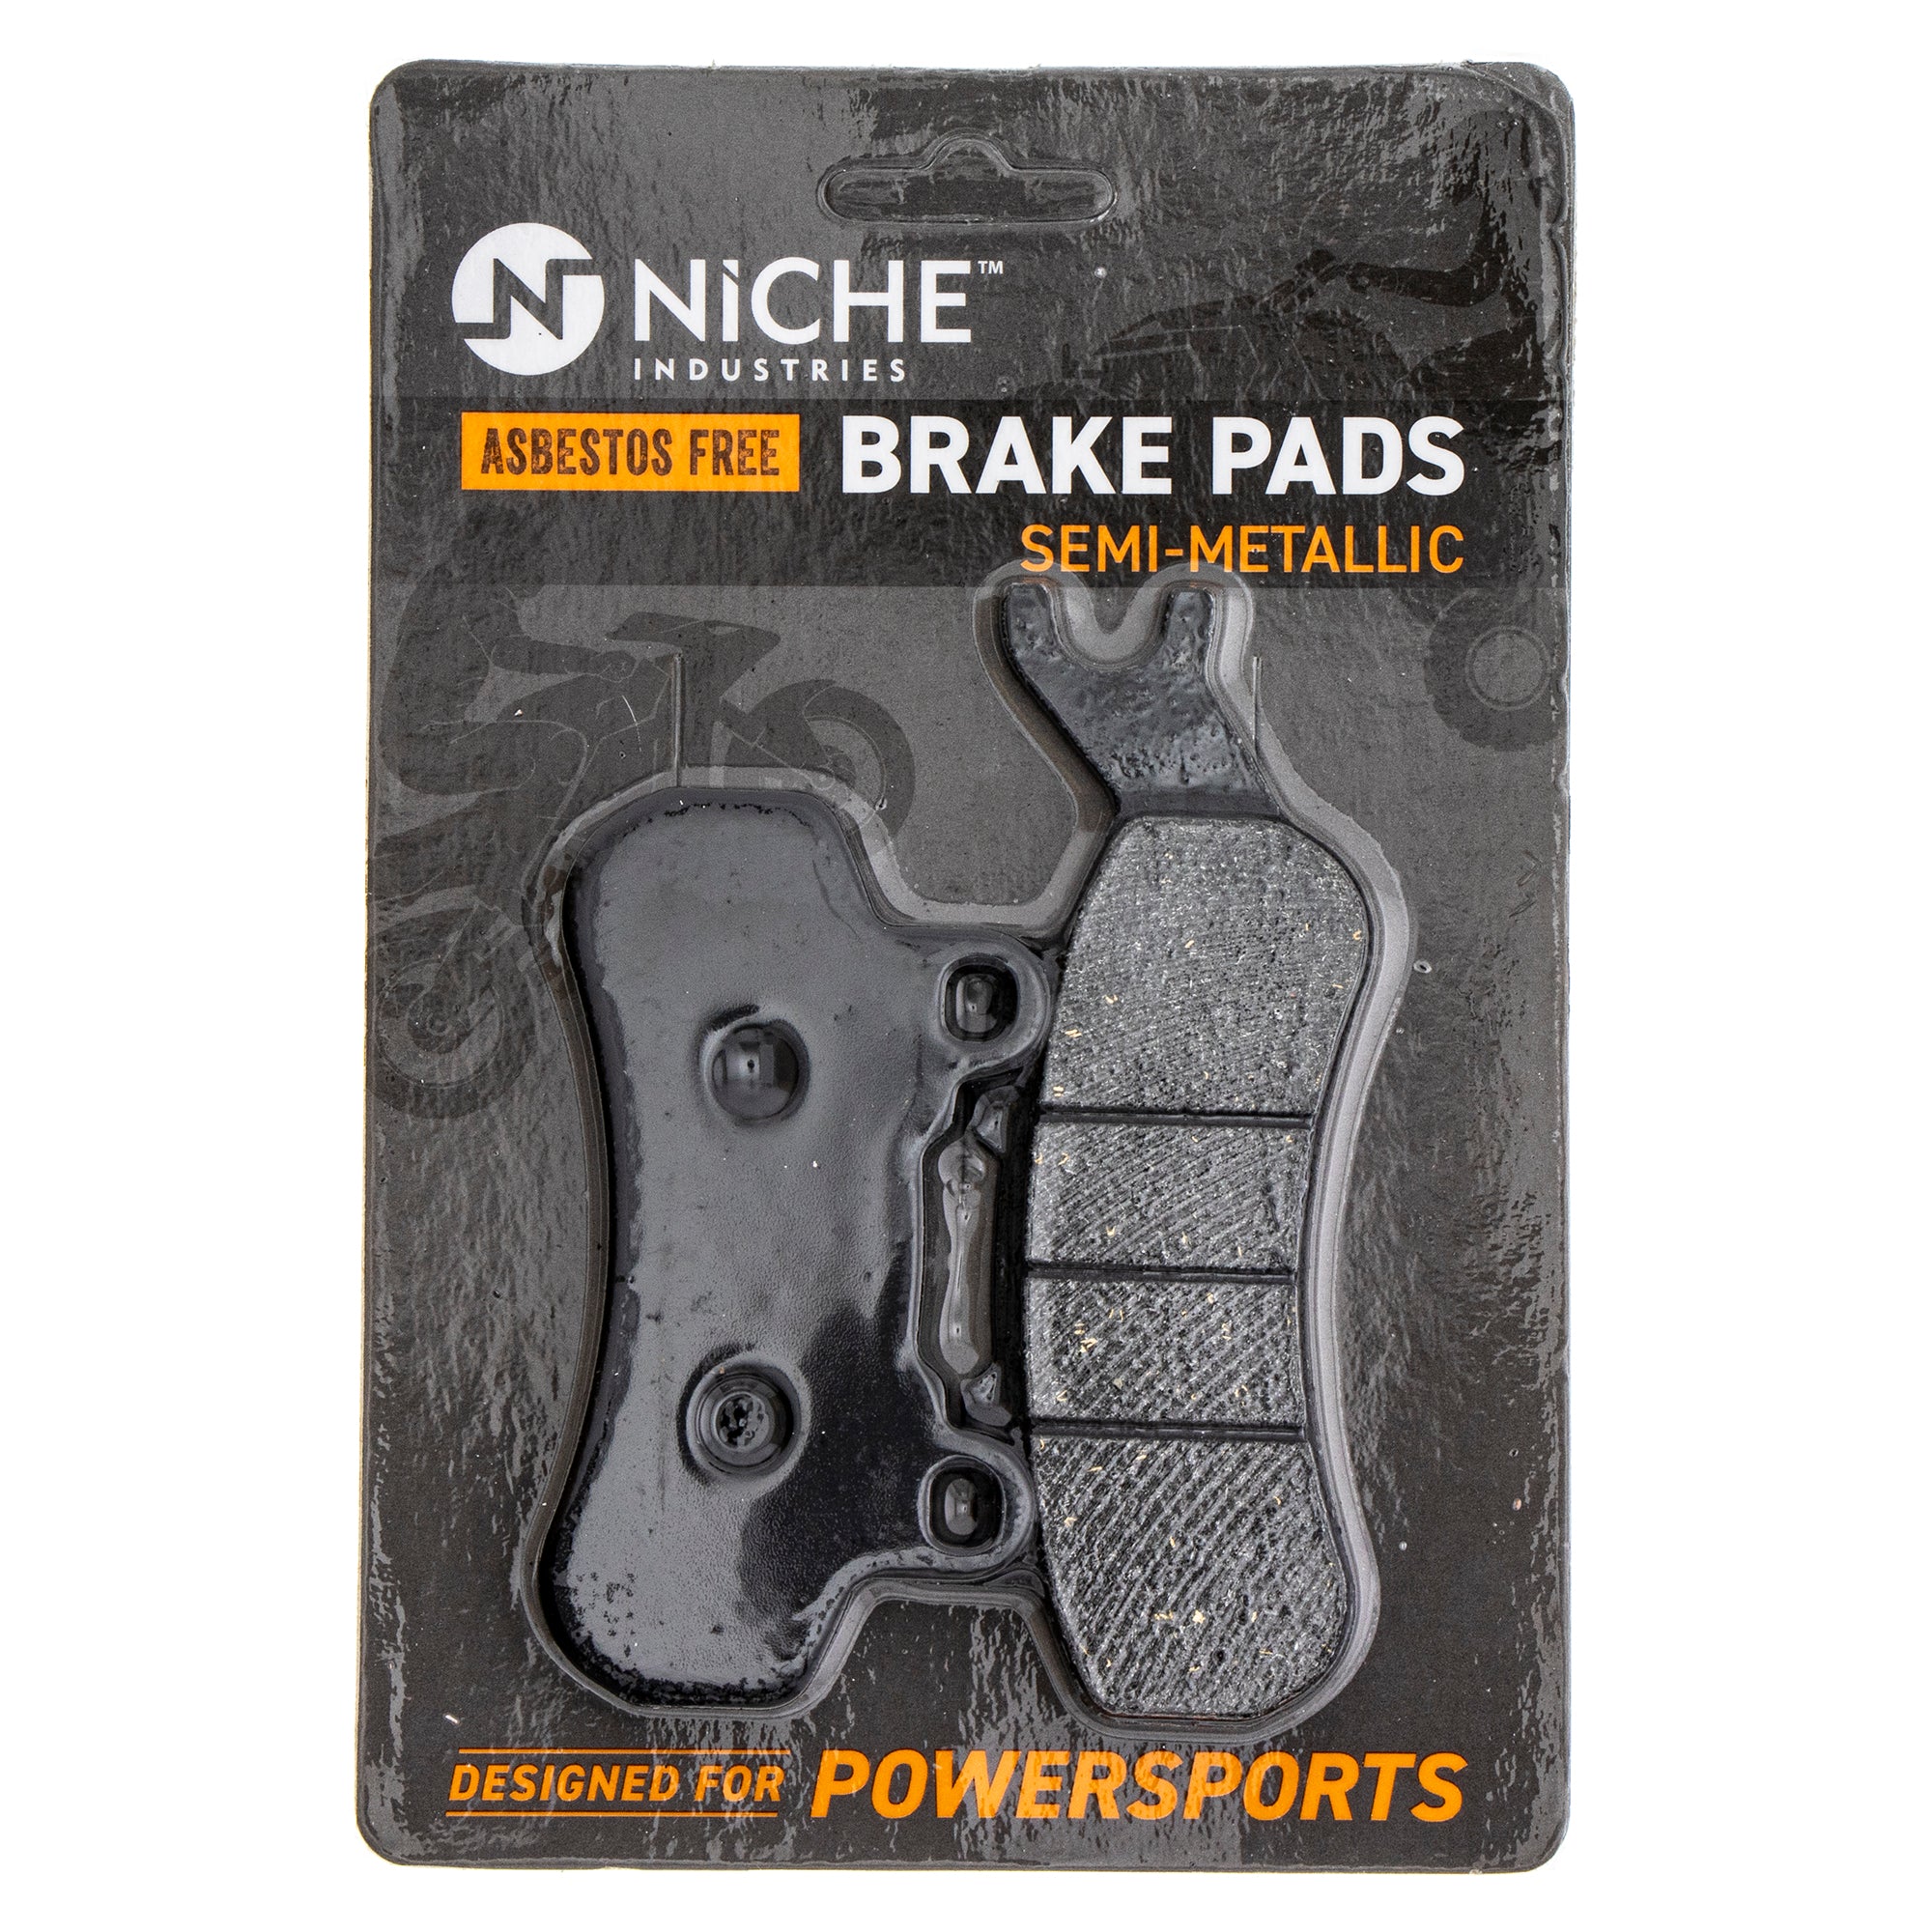 Semi-Metallic Brake Pads for BRP Can-Am Ski-Doo Sea-Doo Traxter Maverick 715900379 NICHE 519-KPA2339D